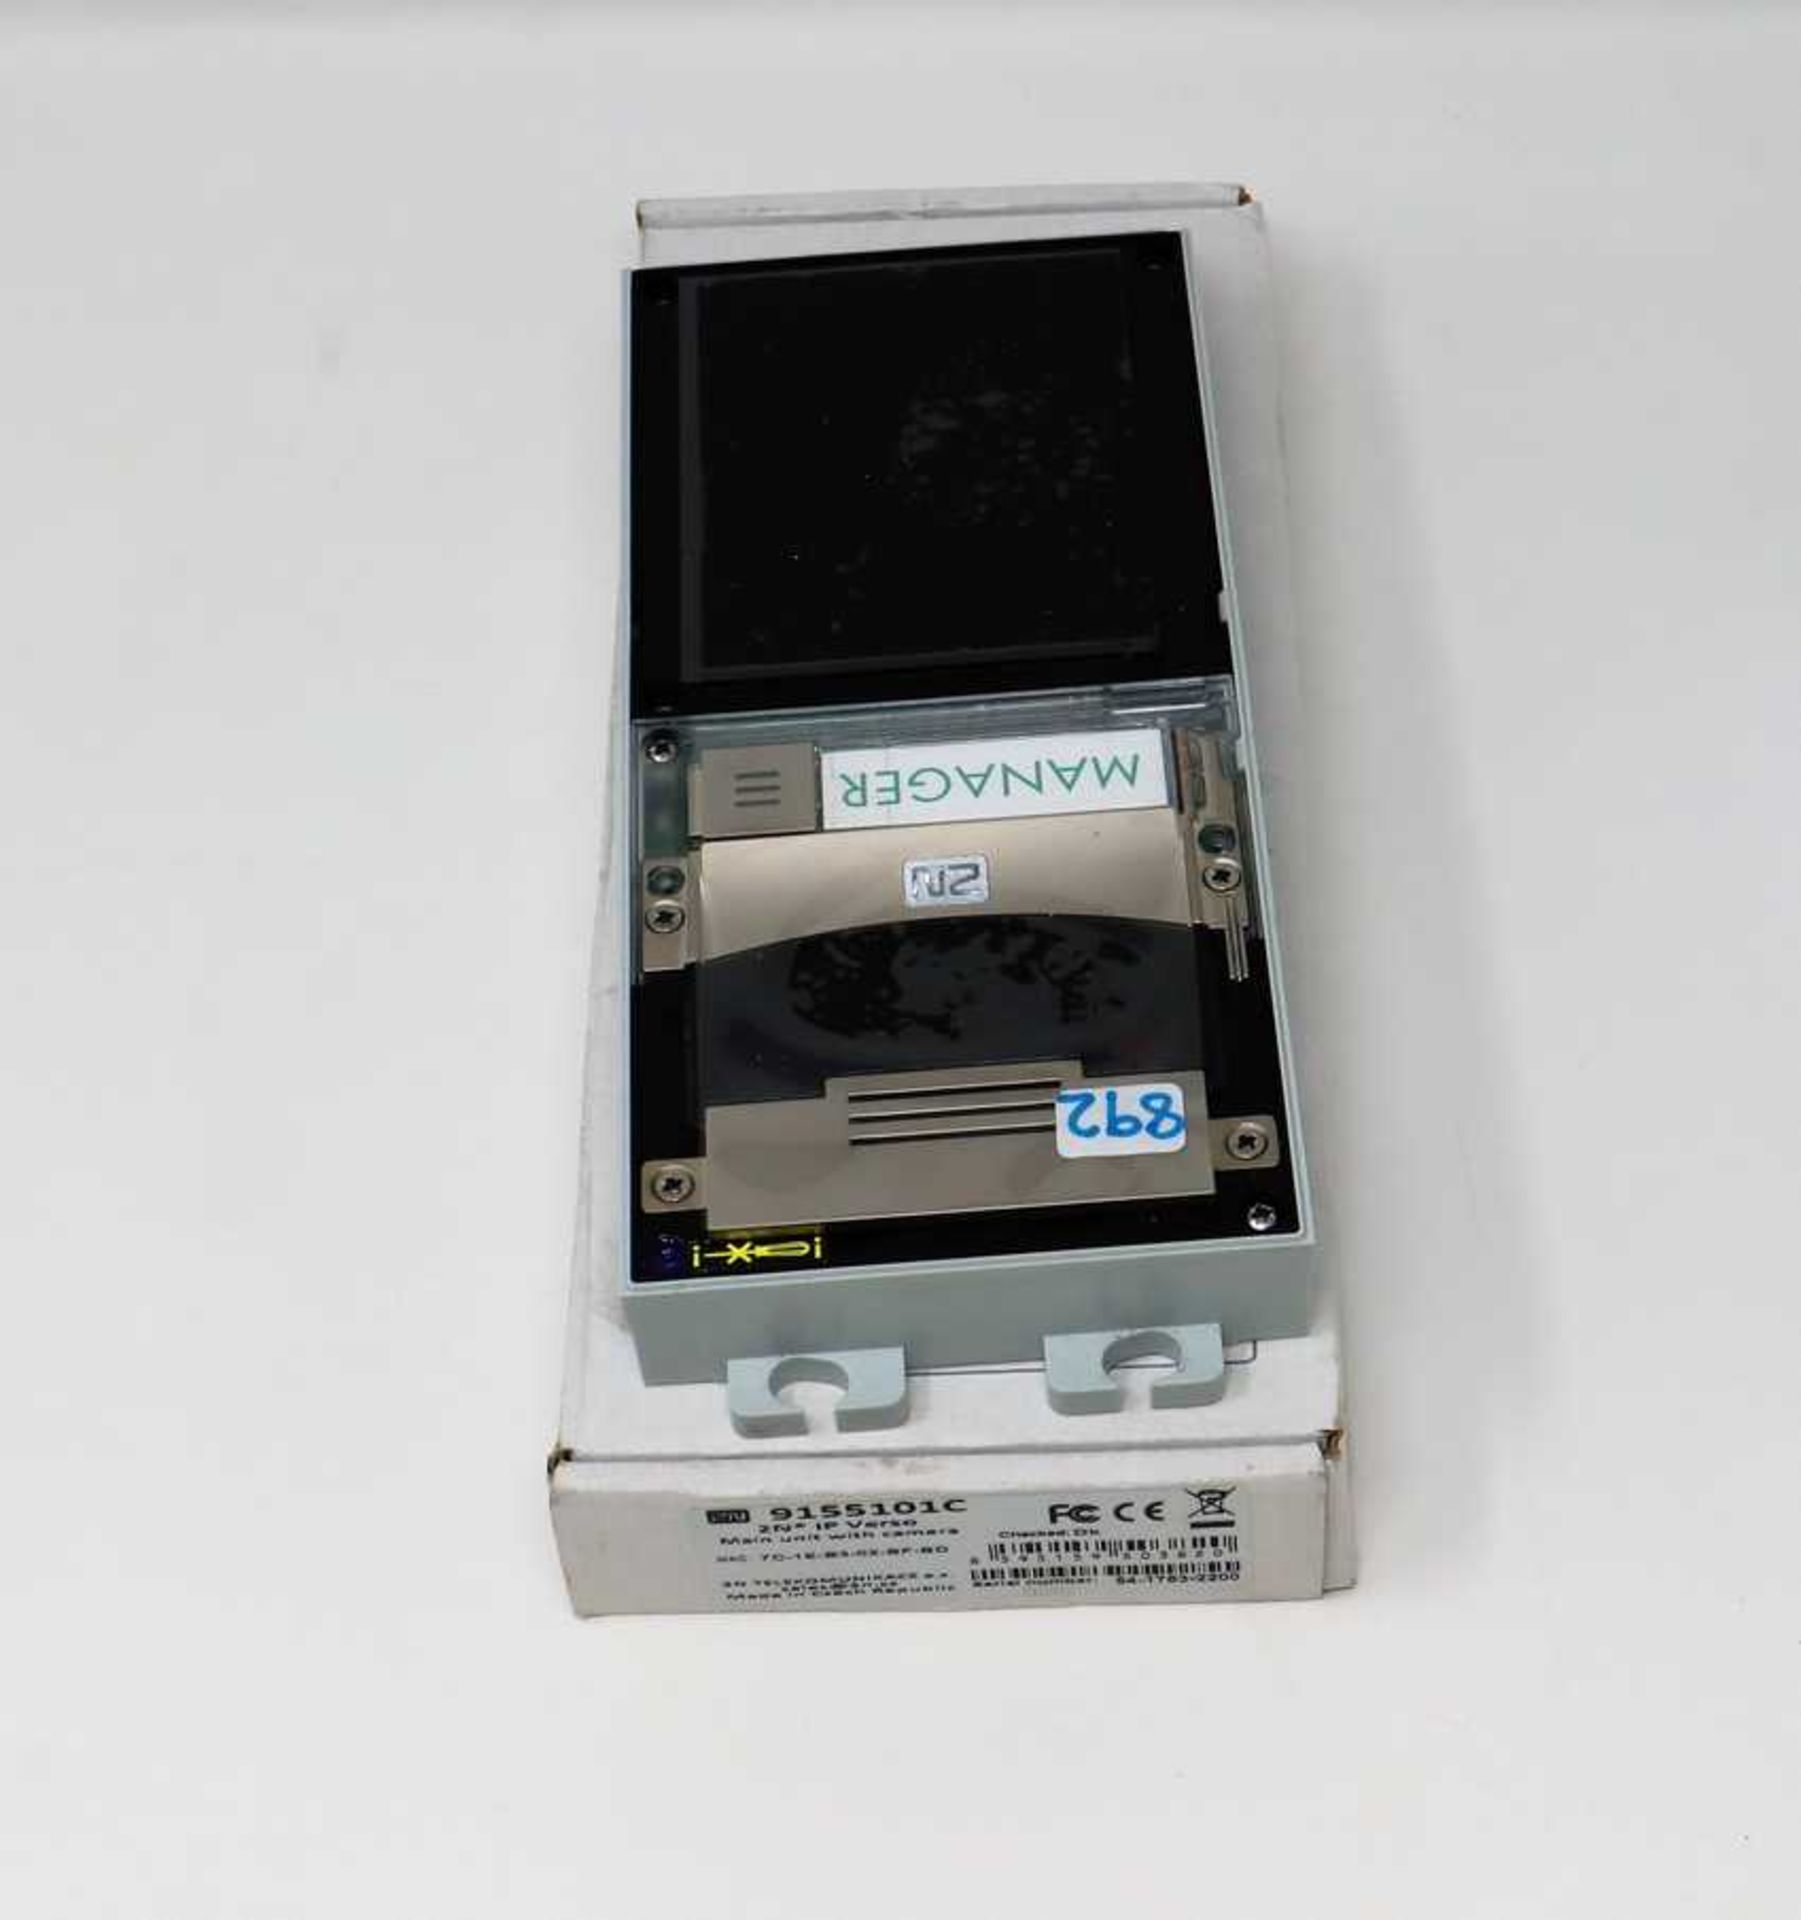 A 2N IP Verso Intercom Modular Door Intercom Basic Unit with Camera (Model: 9155101) (Boxed, appears